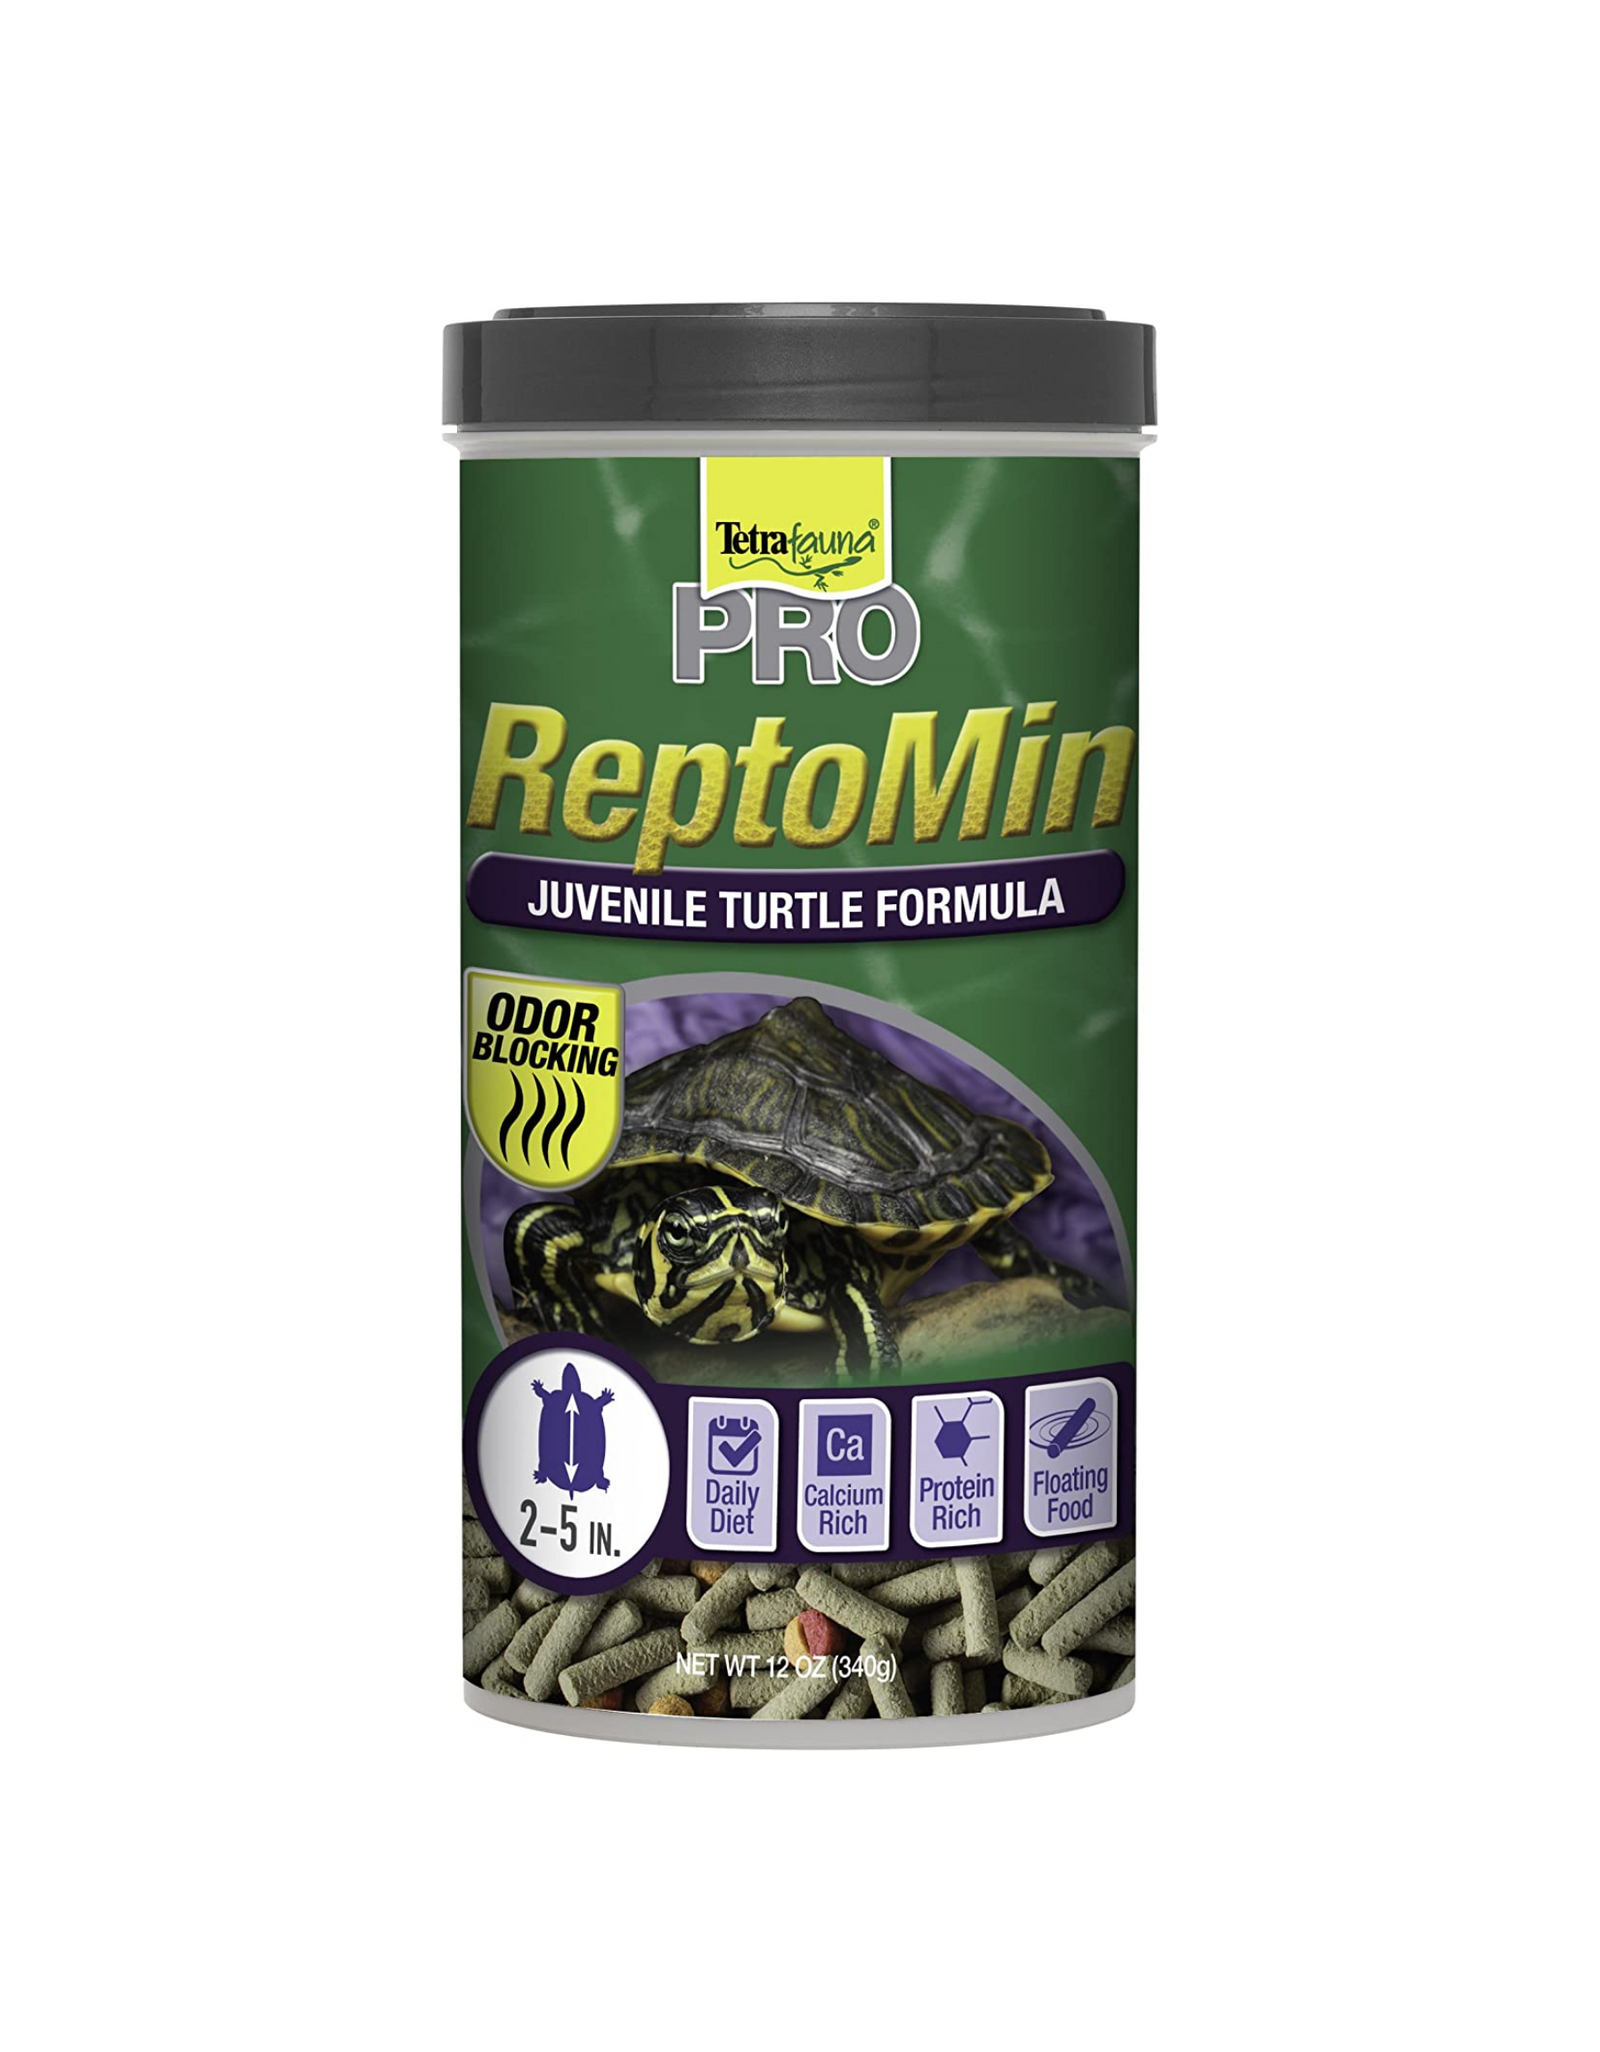 Tetra 77096-00 12 oz Tetrafauna Pro ReptoMin Juvenile Turtle Formula Pellets